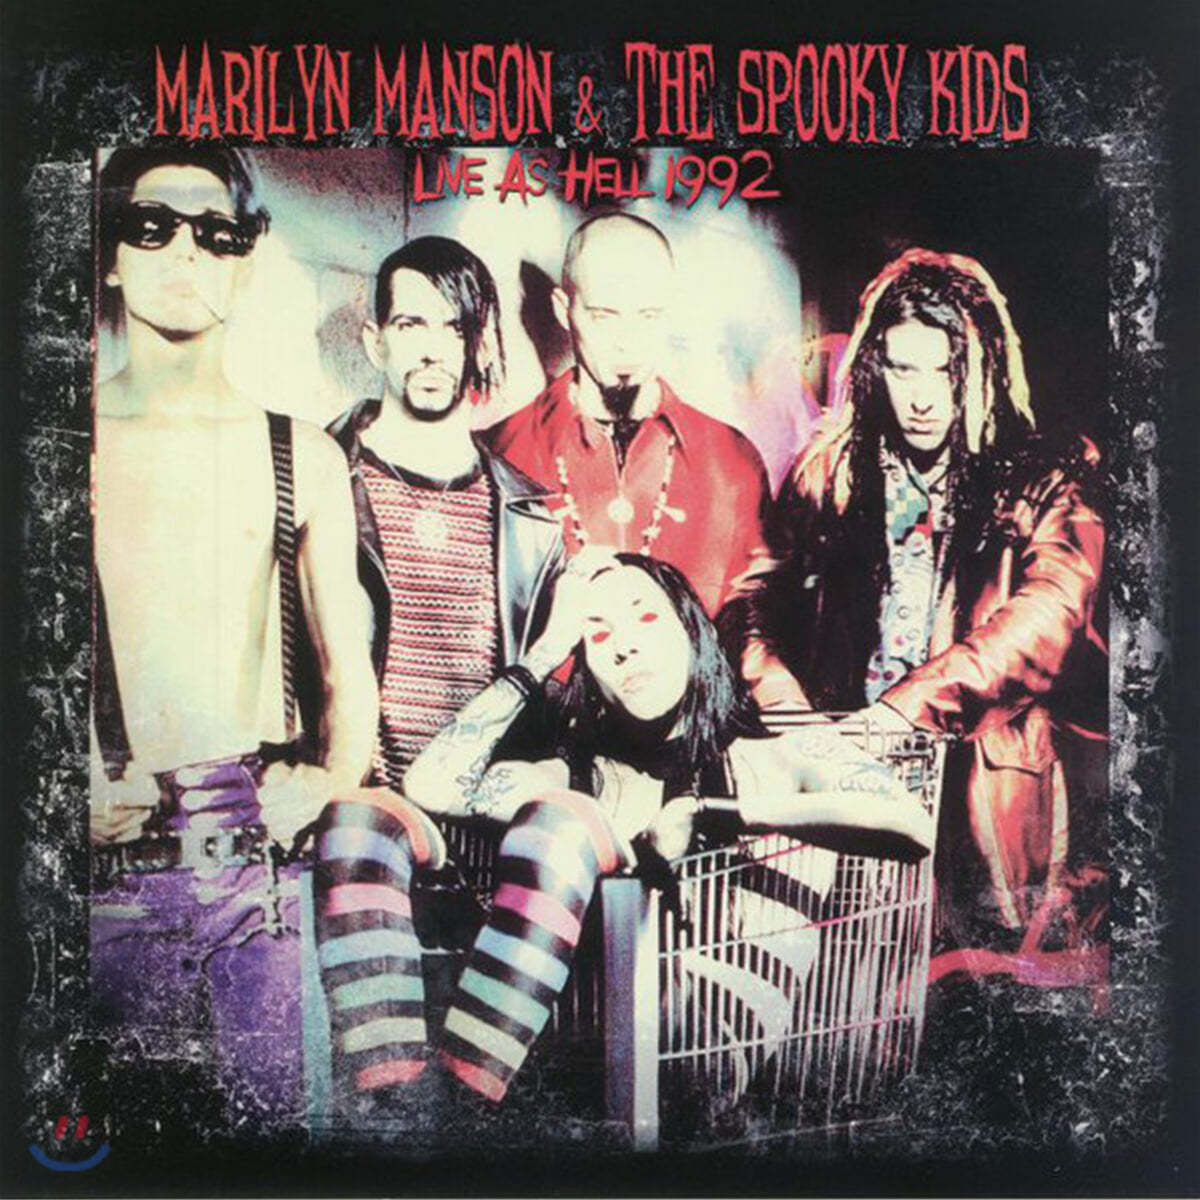 Marilyn Manson & The Spooky Kids (마릴린 맨슨 앤 스푸키 키즈) - Live As Hell 1992 [LP]